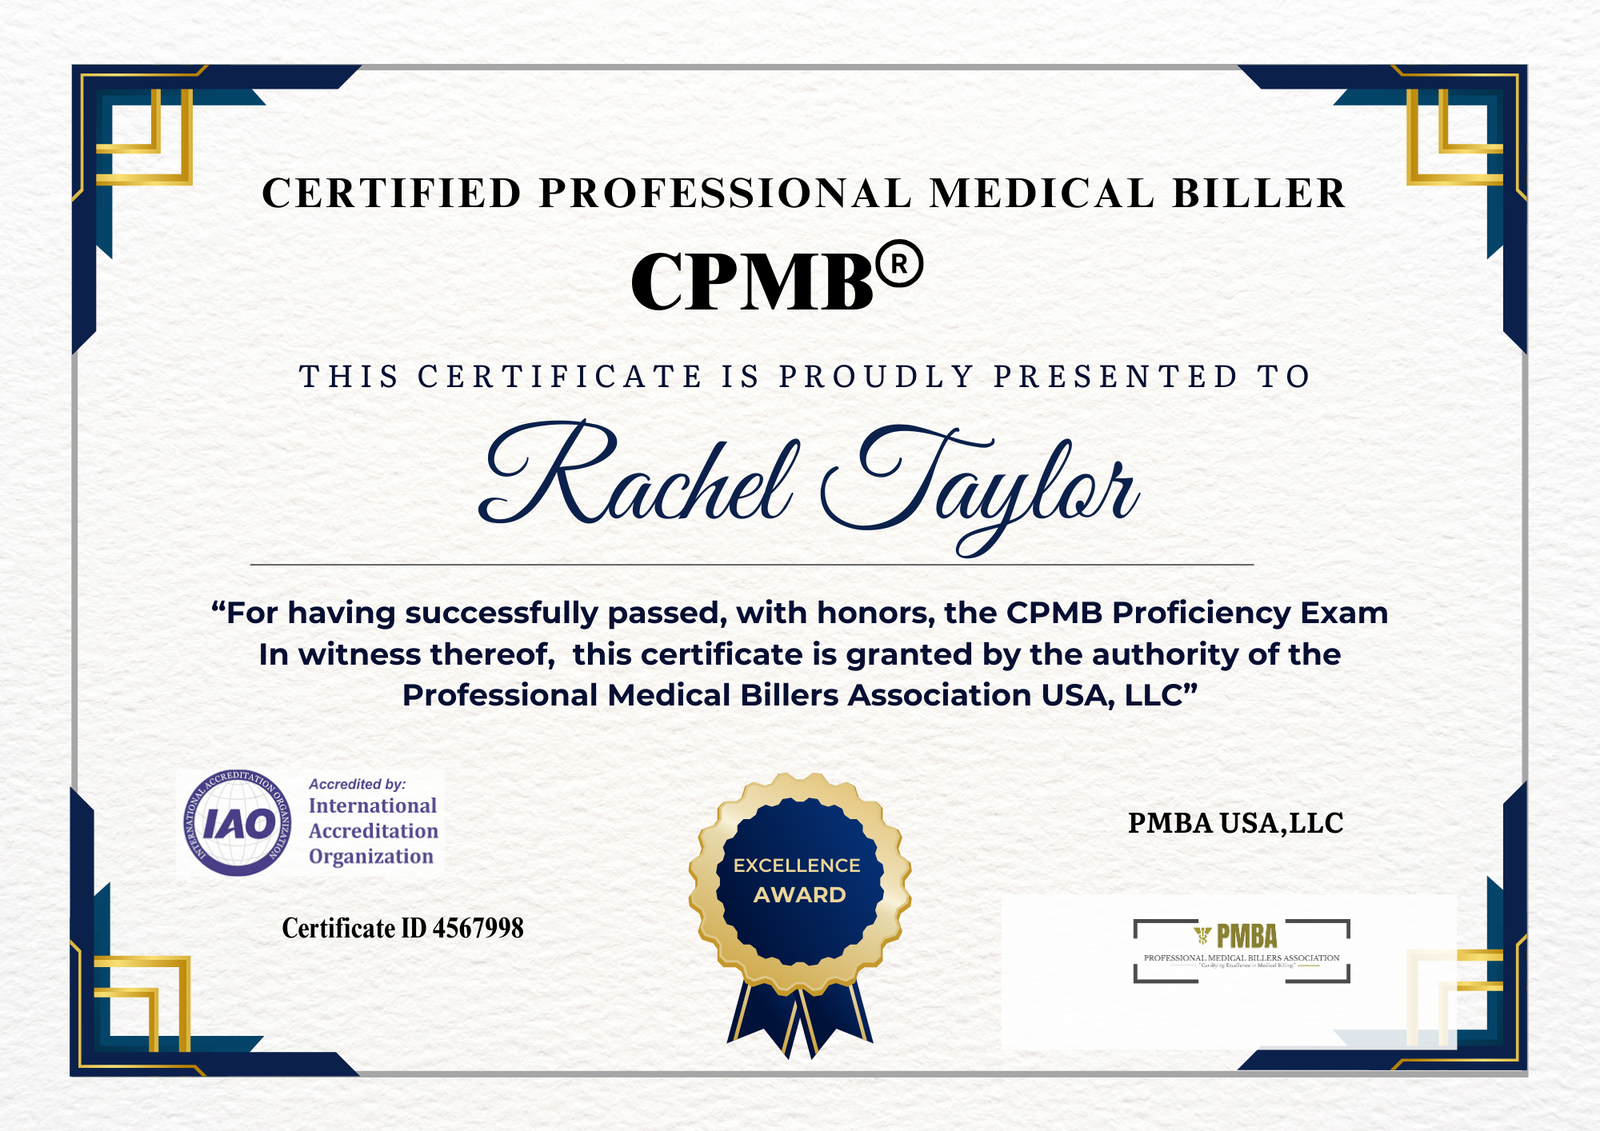 Certified Professional Medical Biller - CPMB